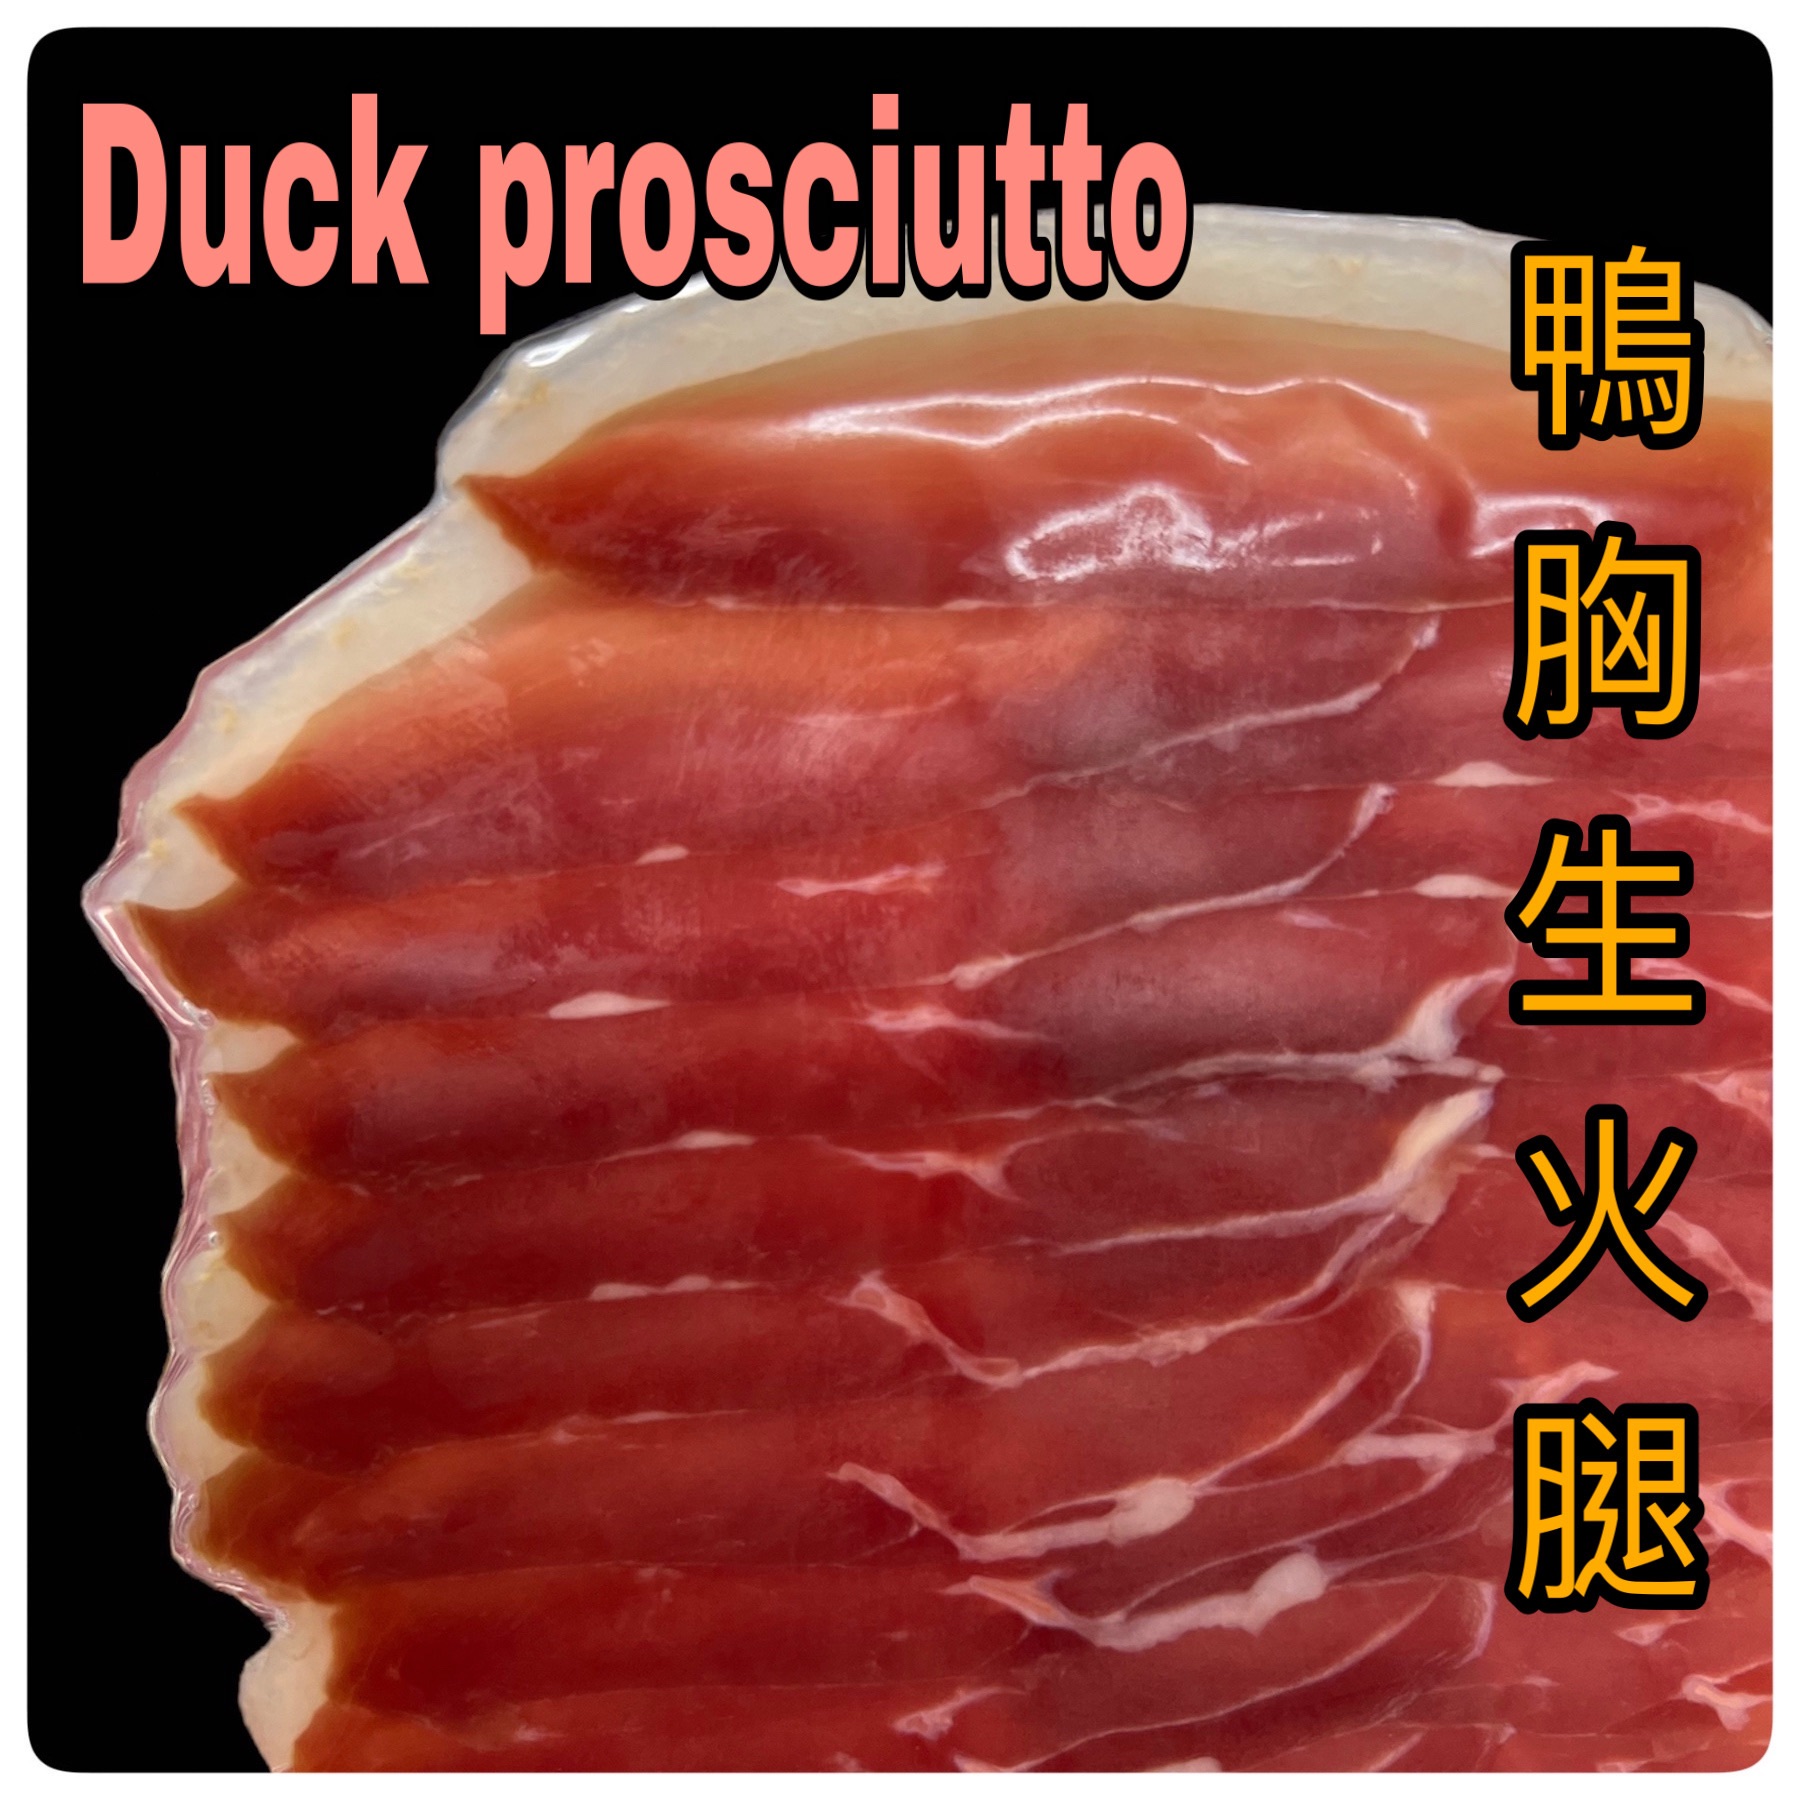 Duck prosciutto義式鴨胸生火腿    👆🏼👆🏼👆🏼點照片看內容